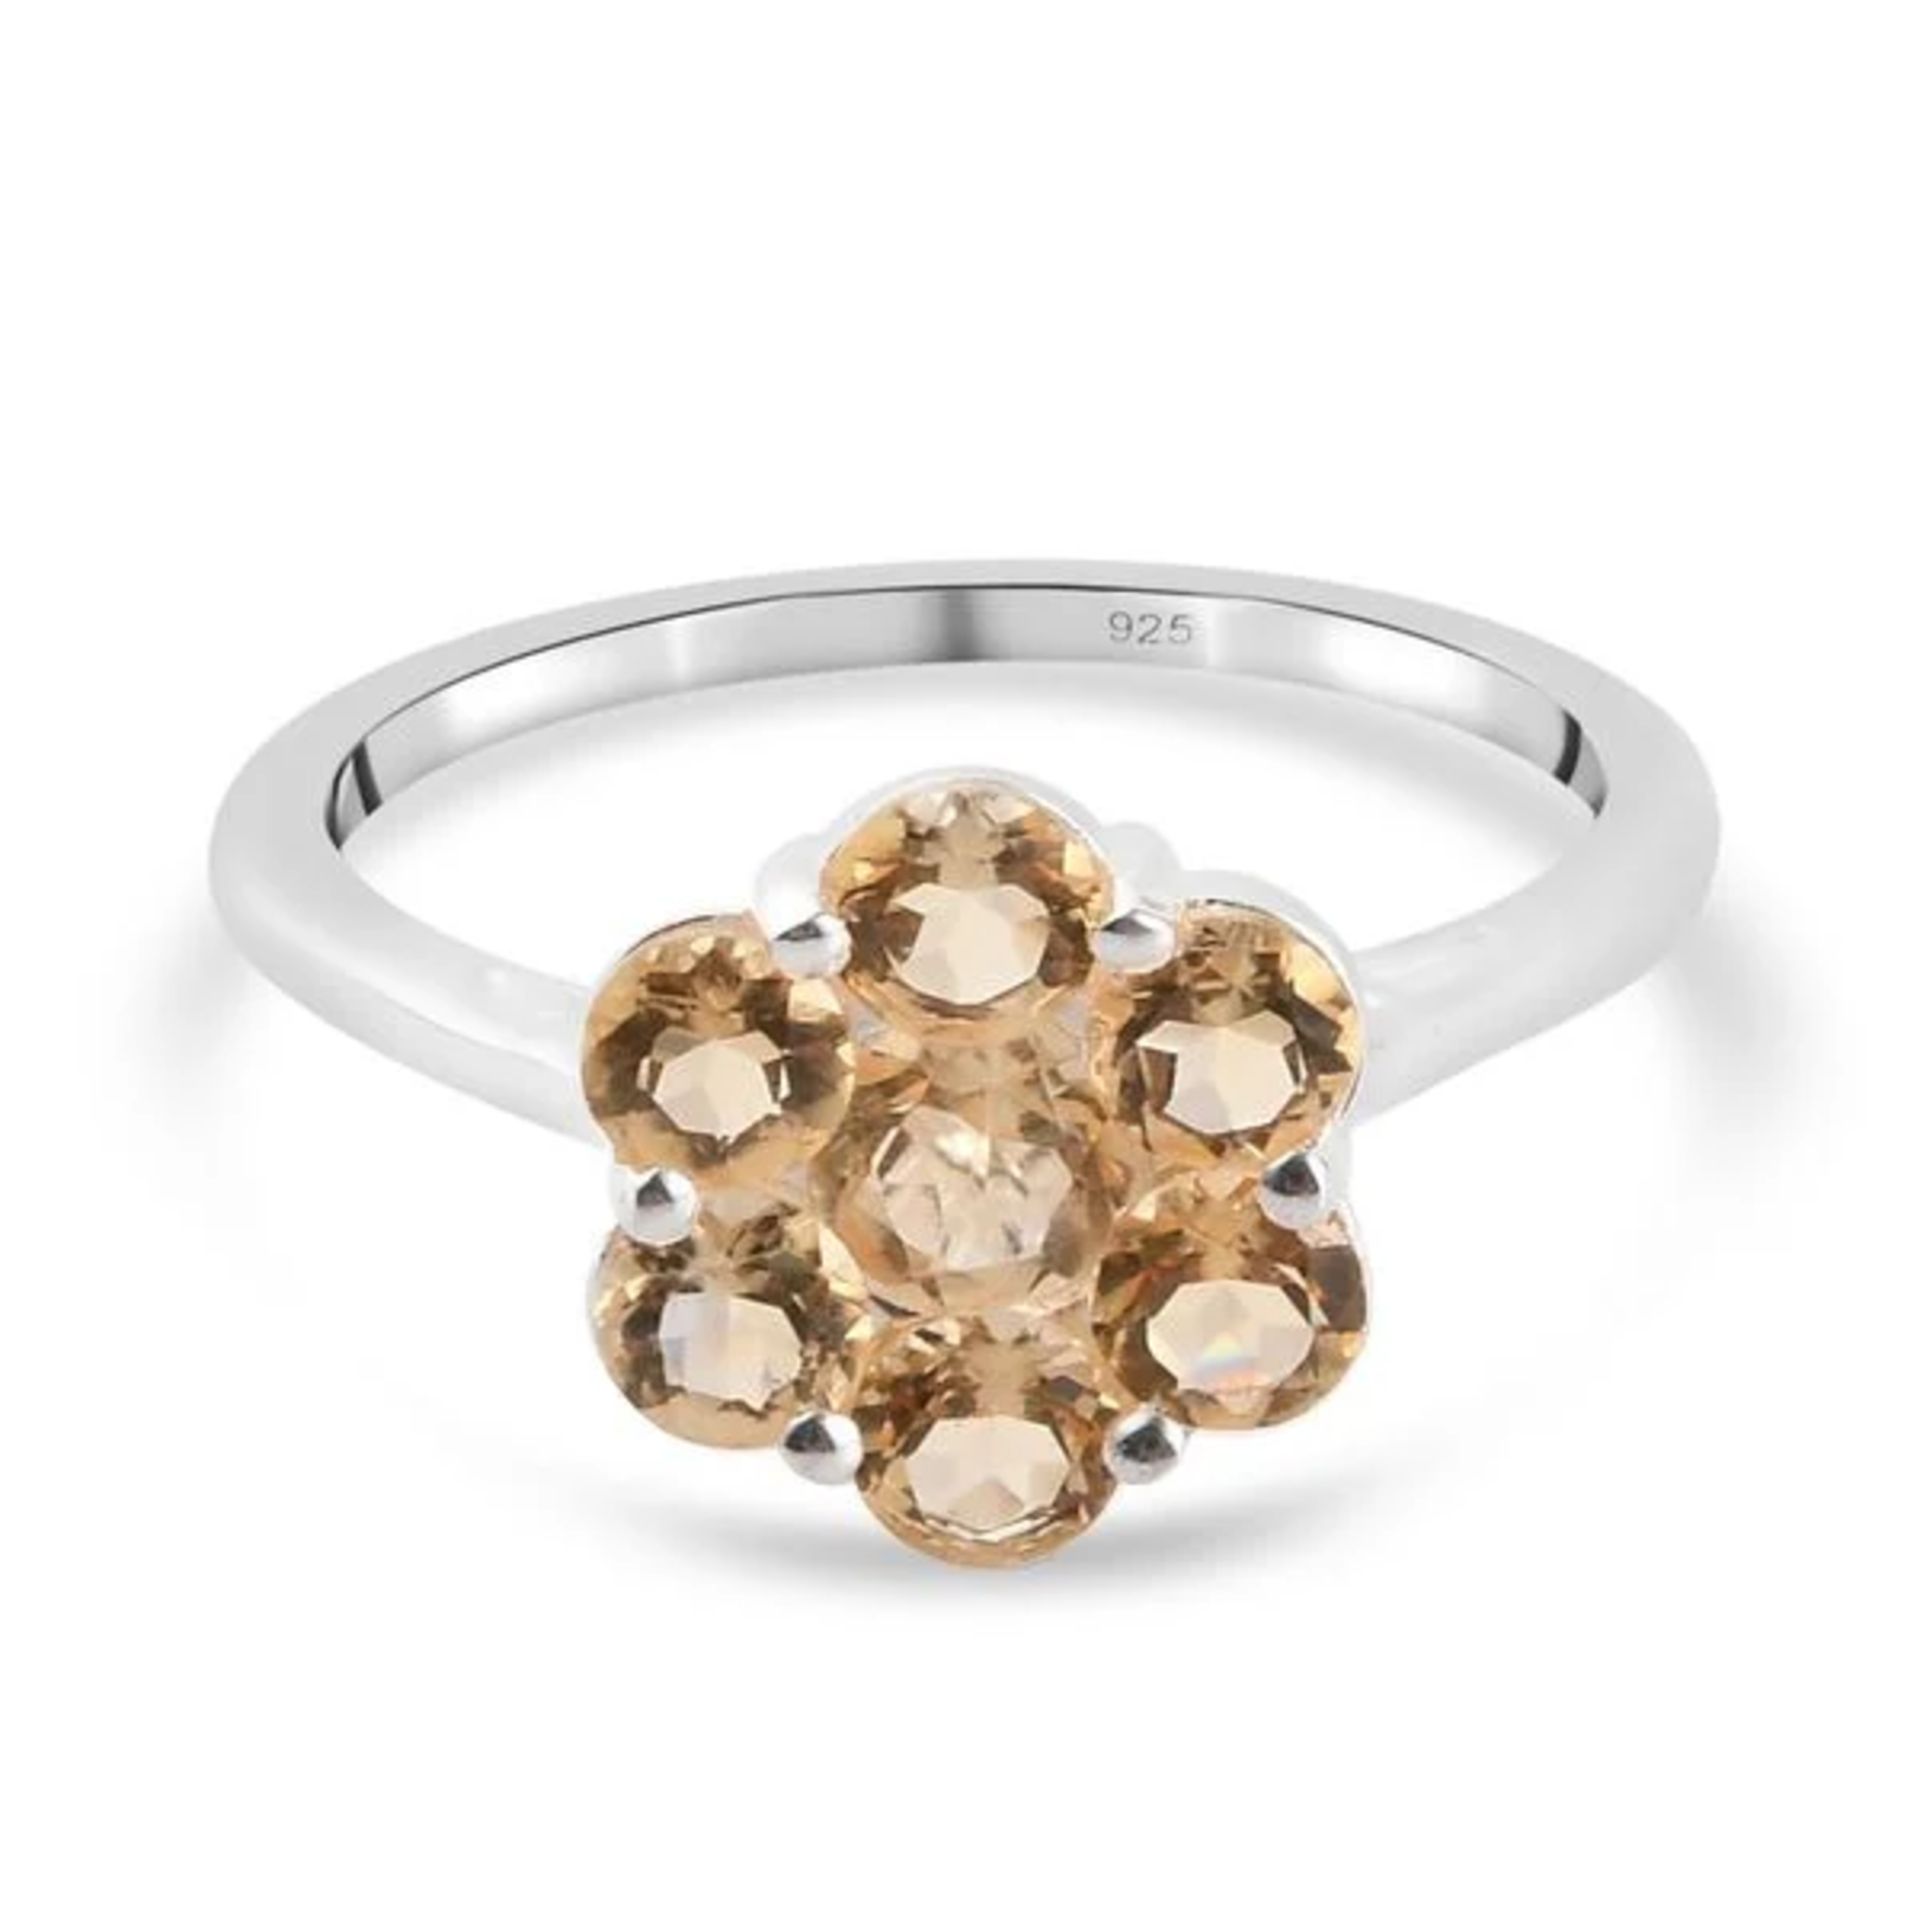 NEW!! Citrine Floral Cluster Ring, Earrings & Bracelet in Sterling Silver - Image 2 of 7